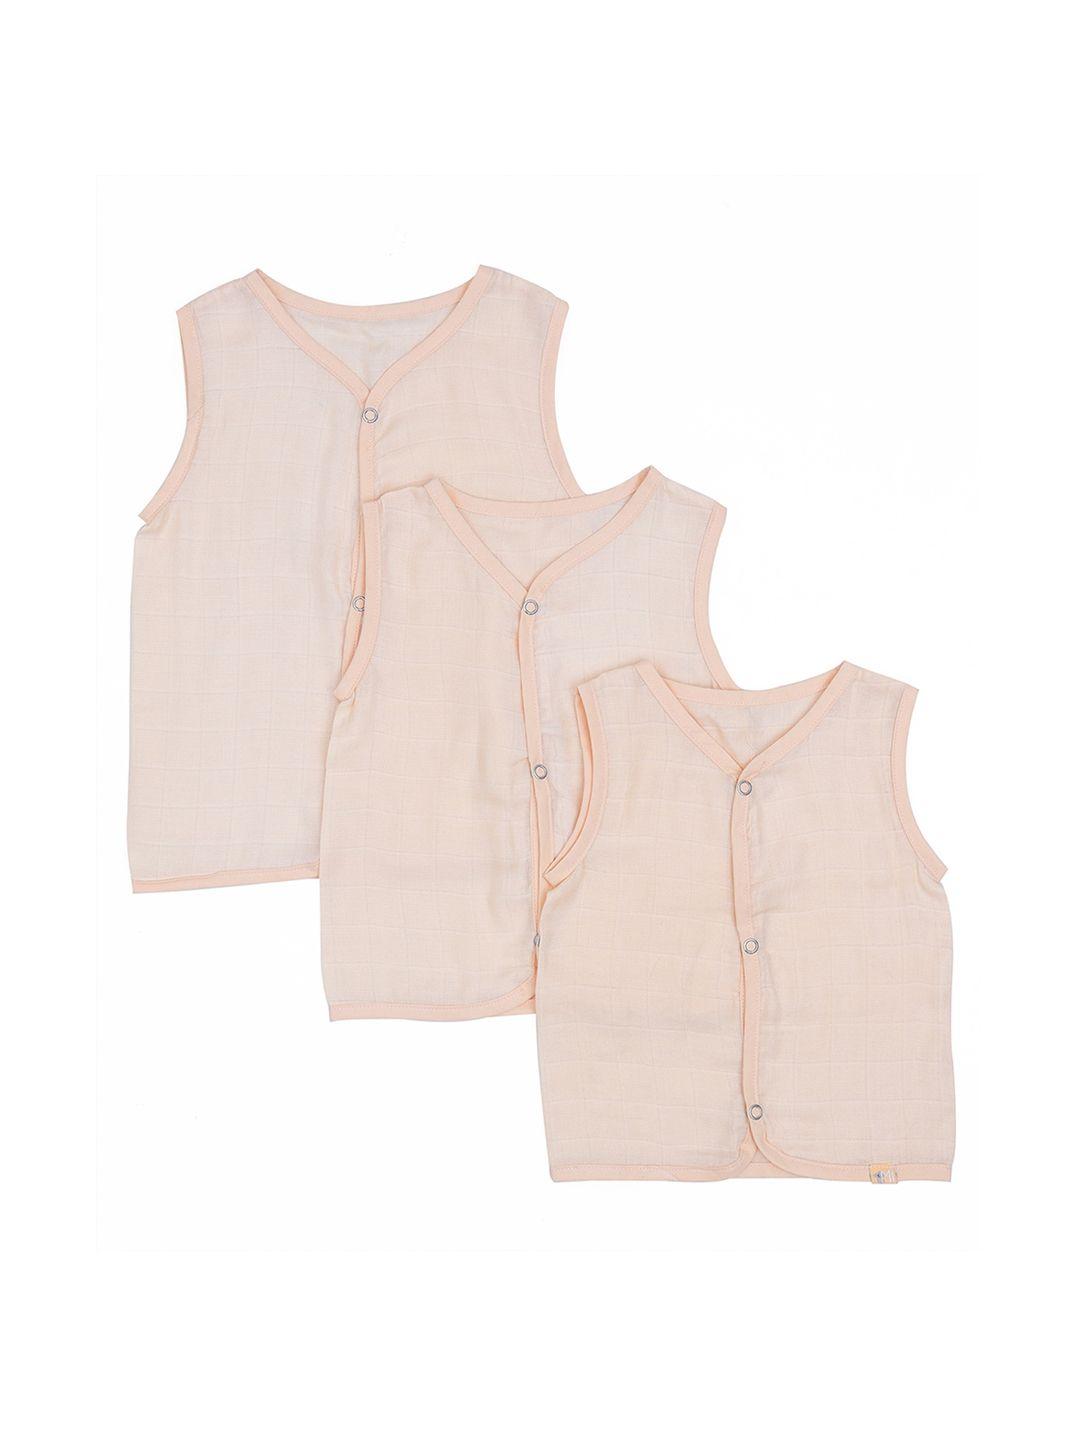 miarcus-kids-set-of-3-beige-checked-cotton-basic-vests